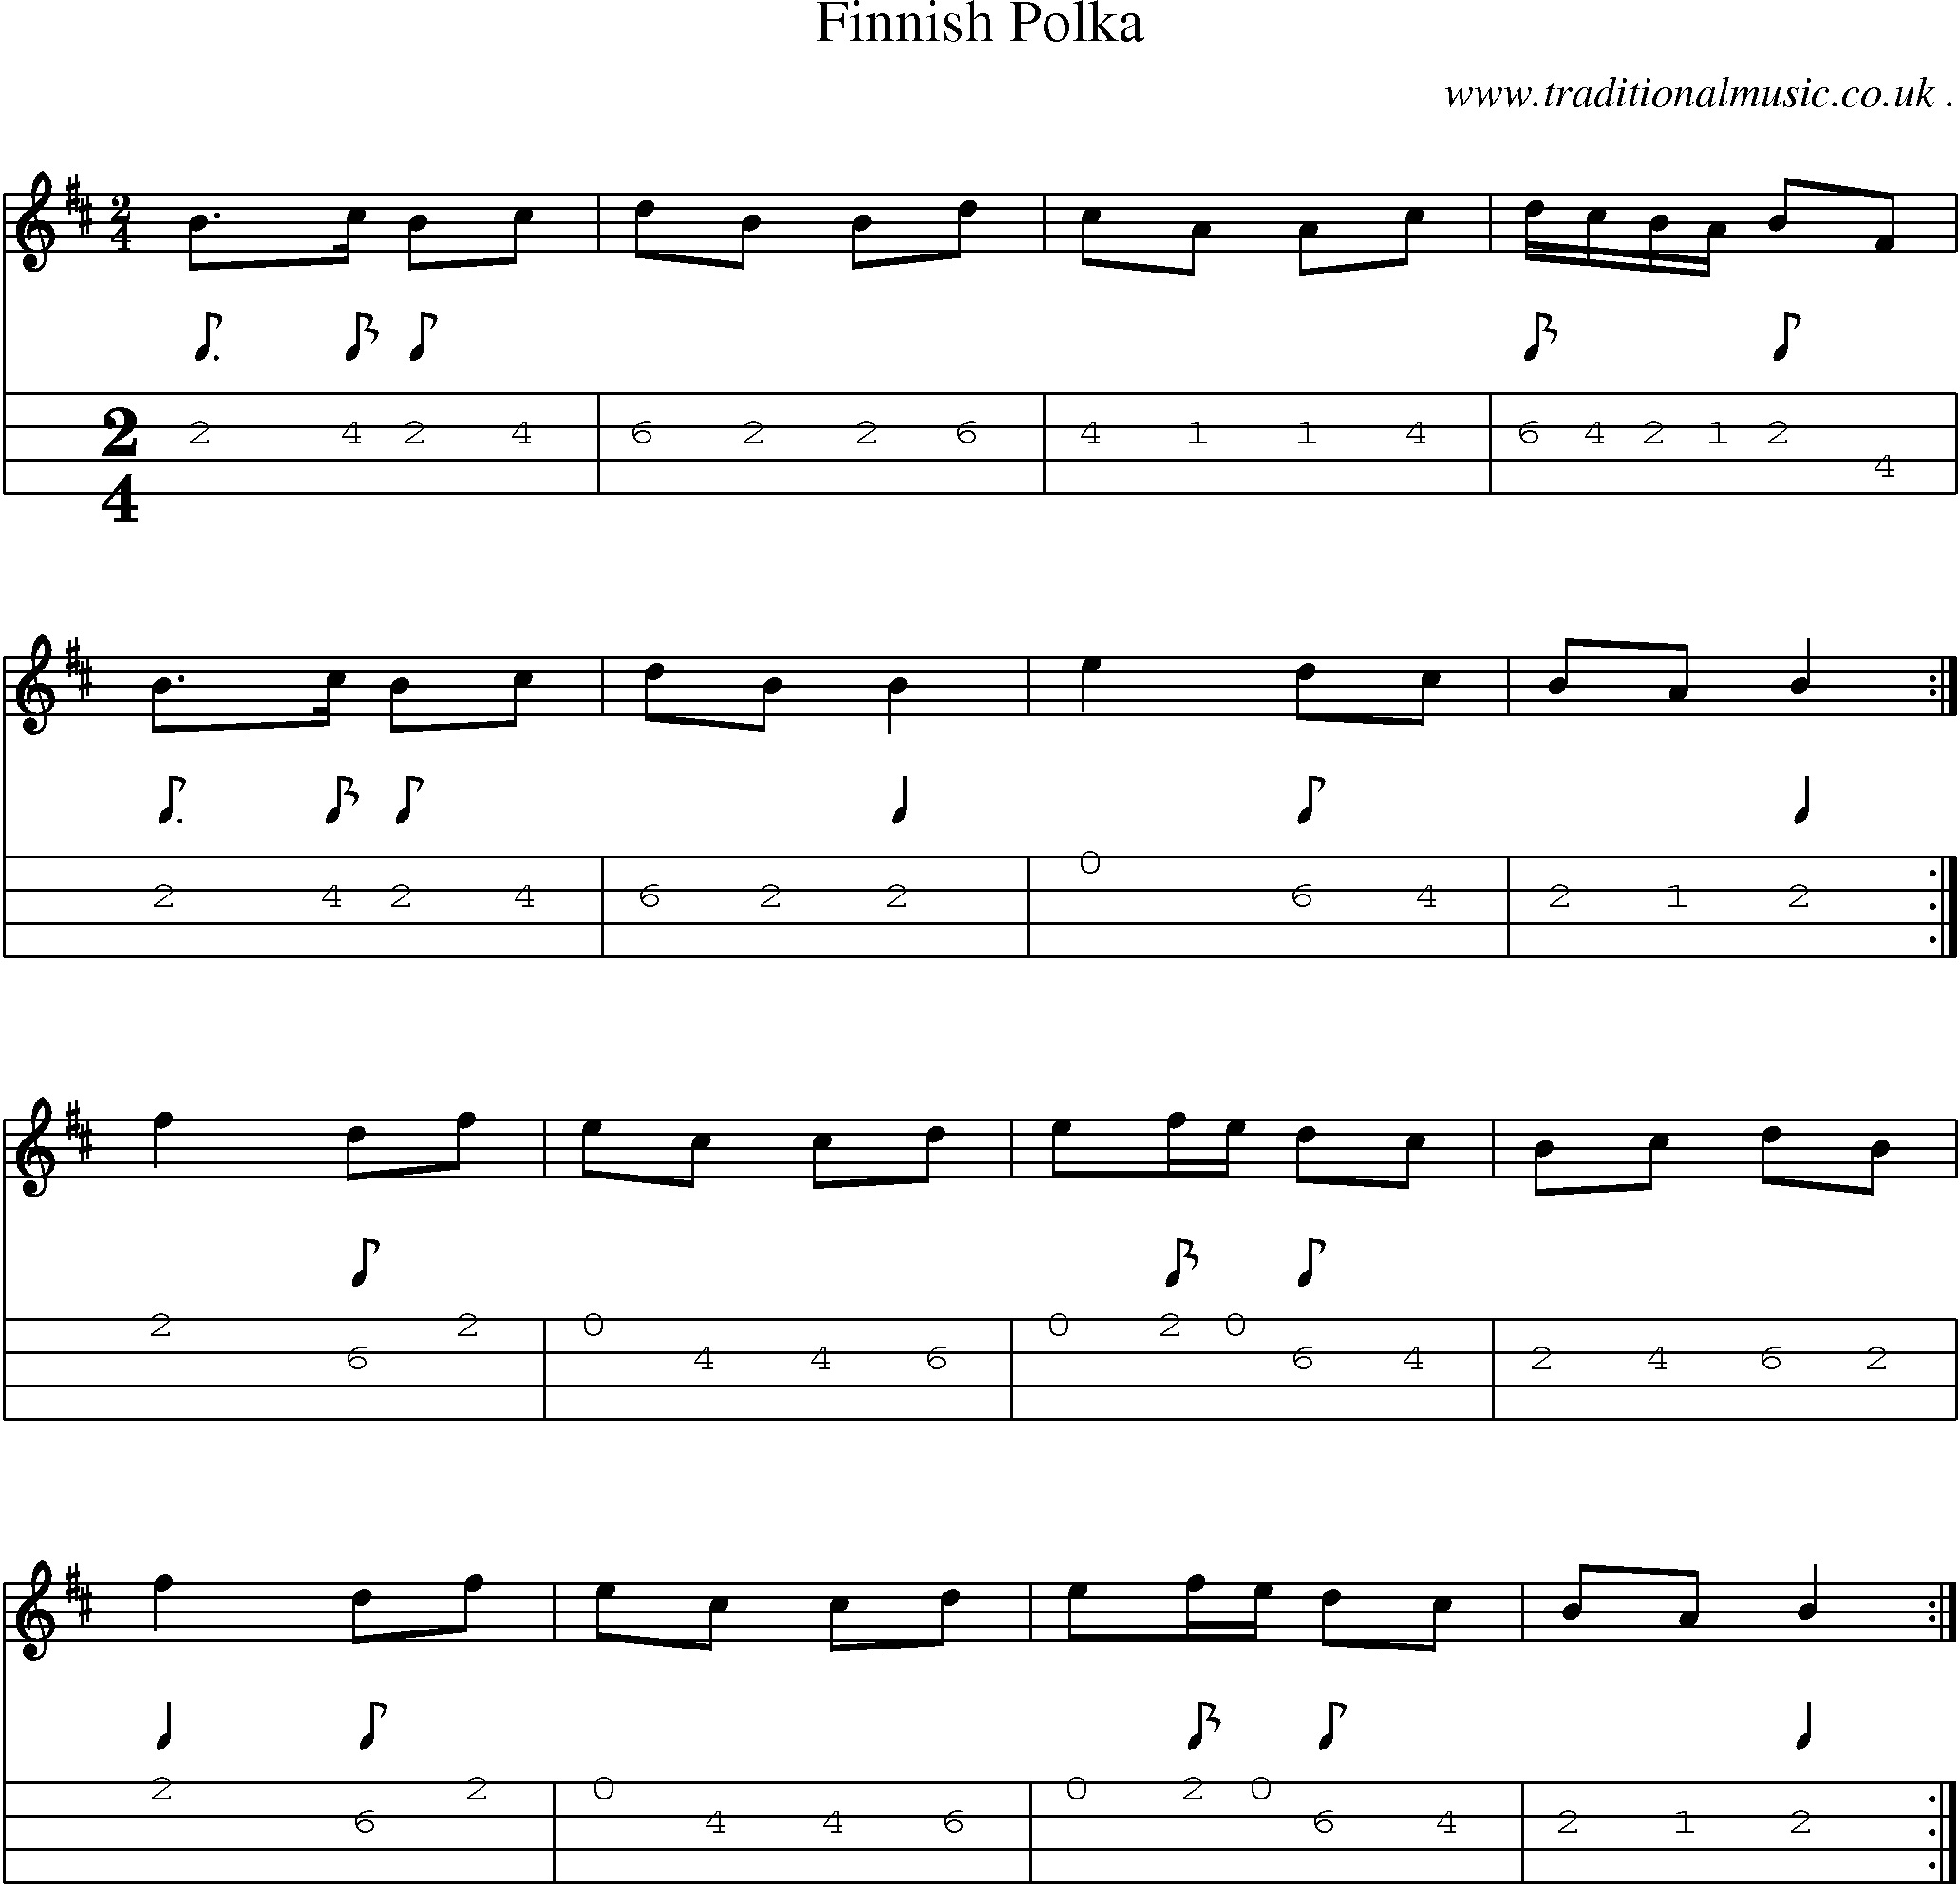 Sheet-Music and Mandolin Tabs for Finnish Polka